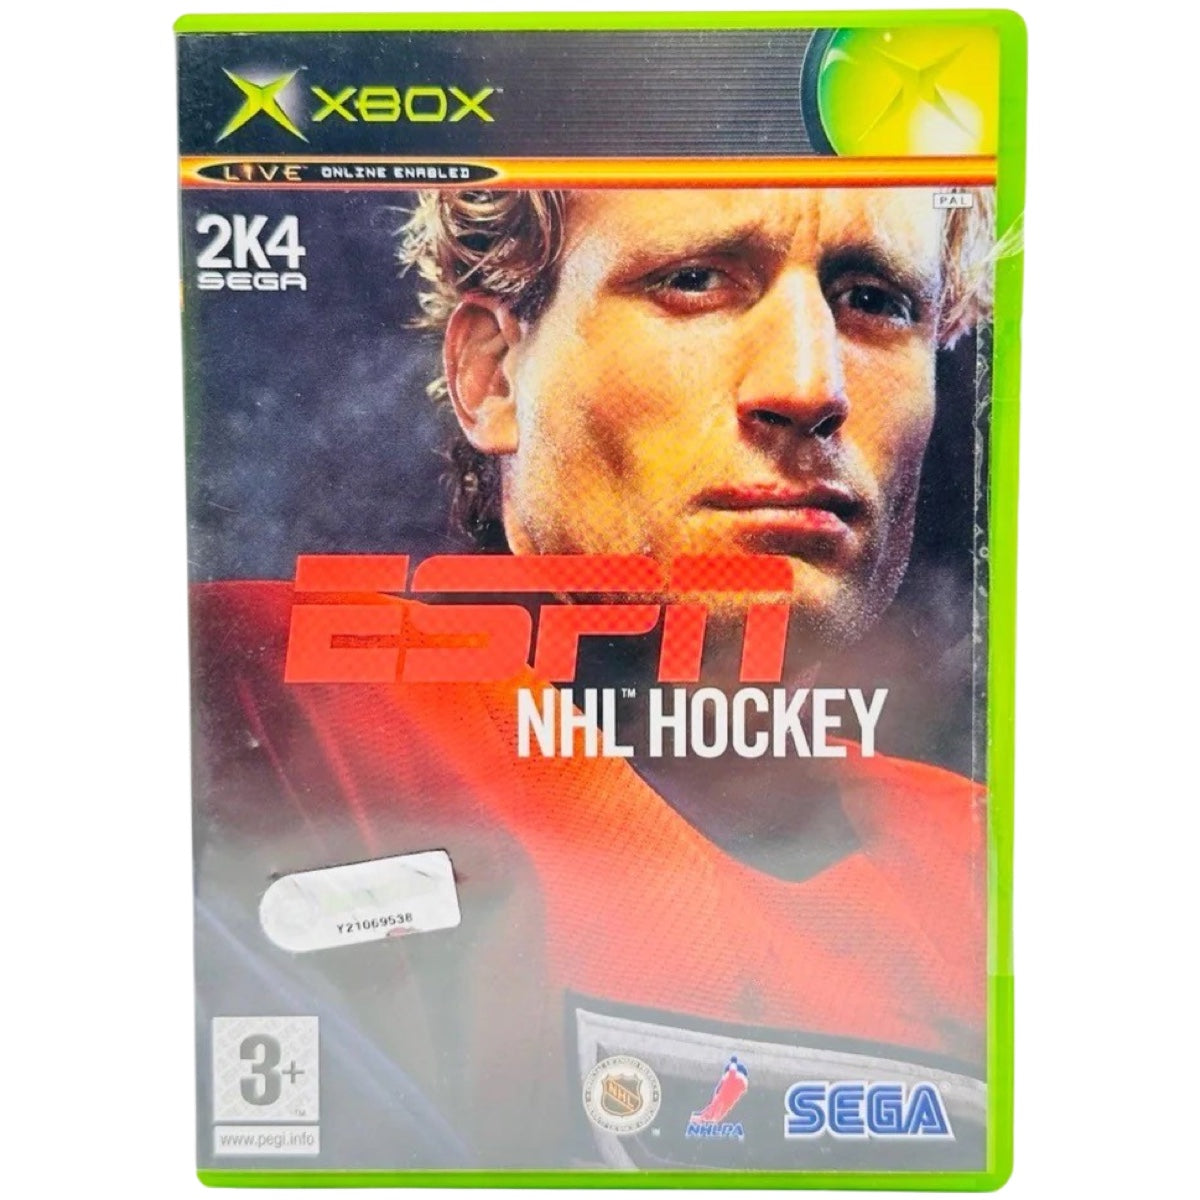 Xbox: ESPN NHL Hockey